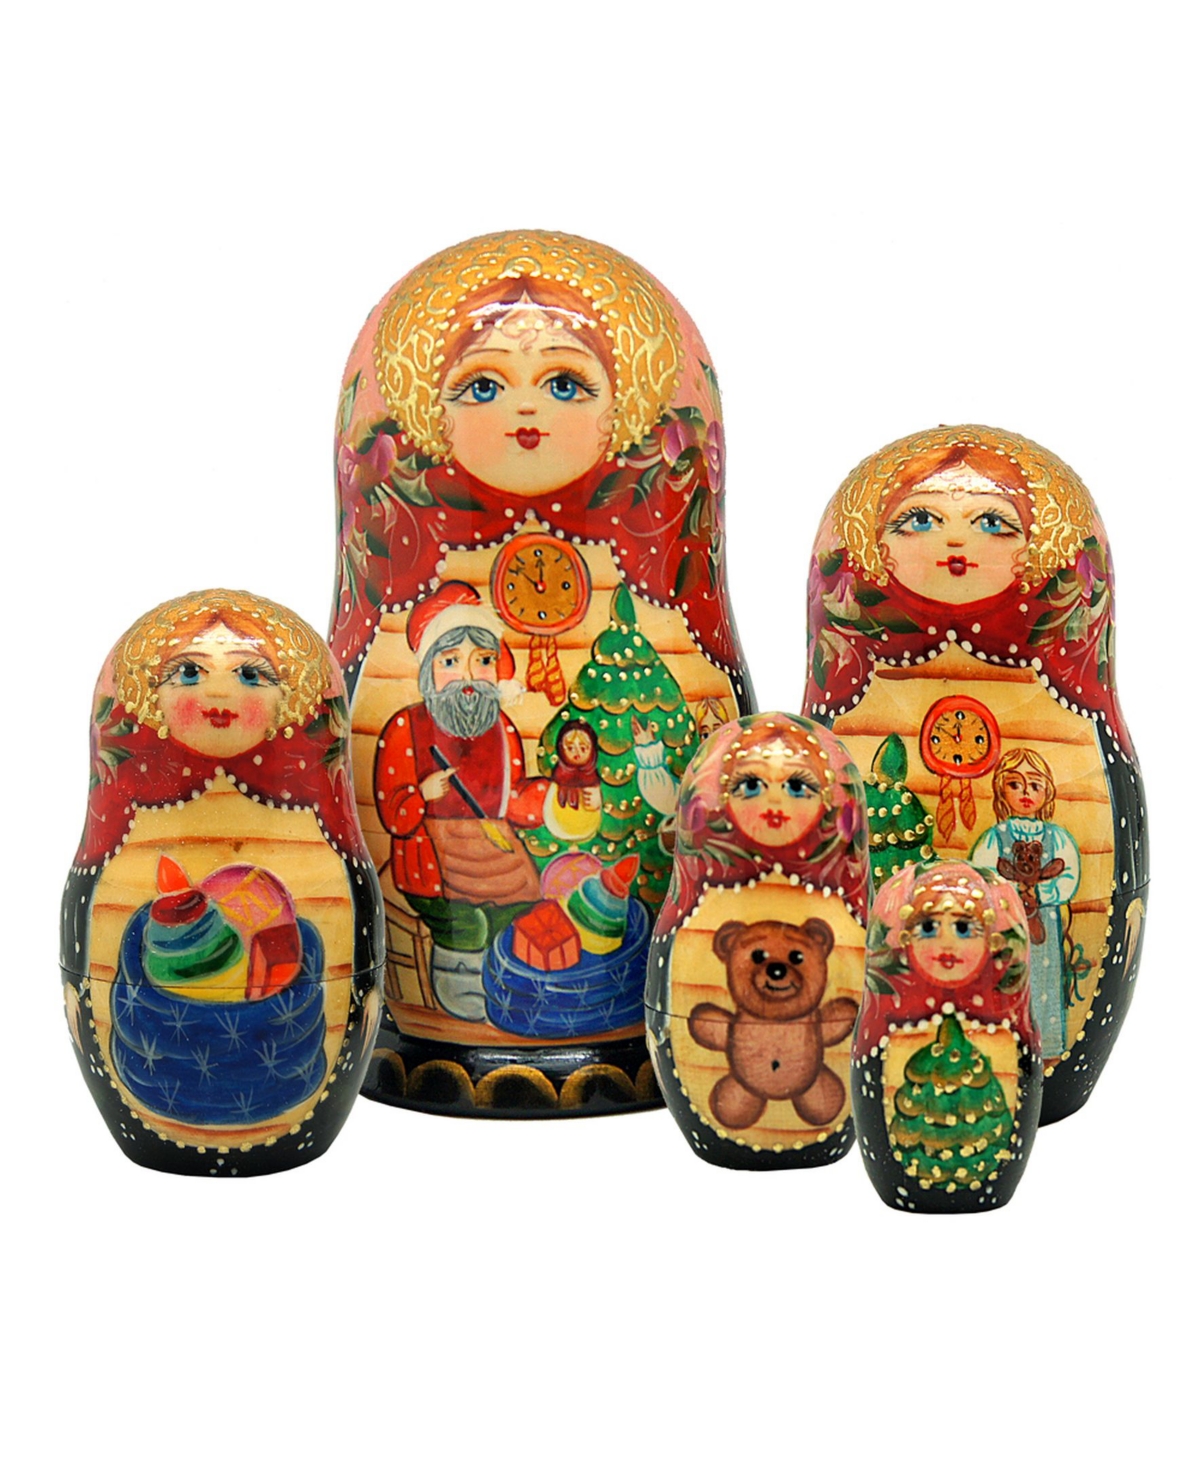 Night Before Christmas 5 Piece Russian Matryoshka Nested Doll - Multi